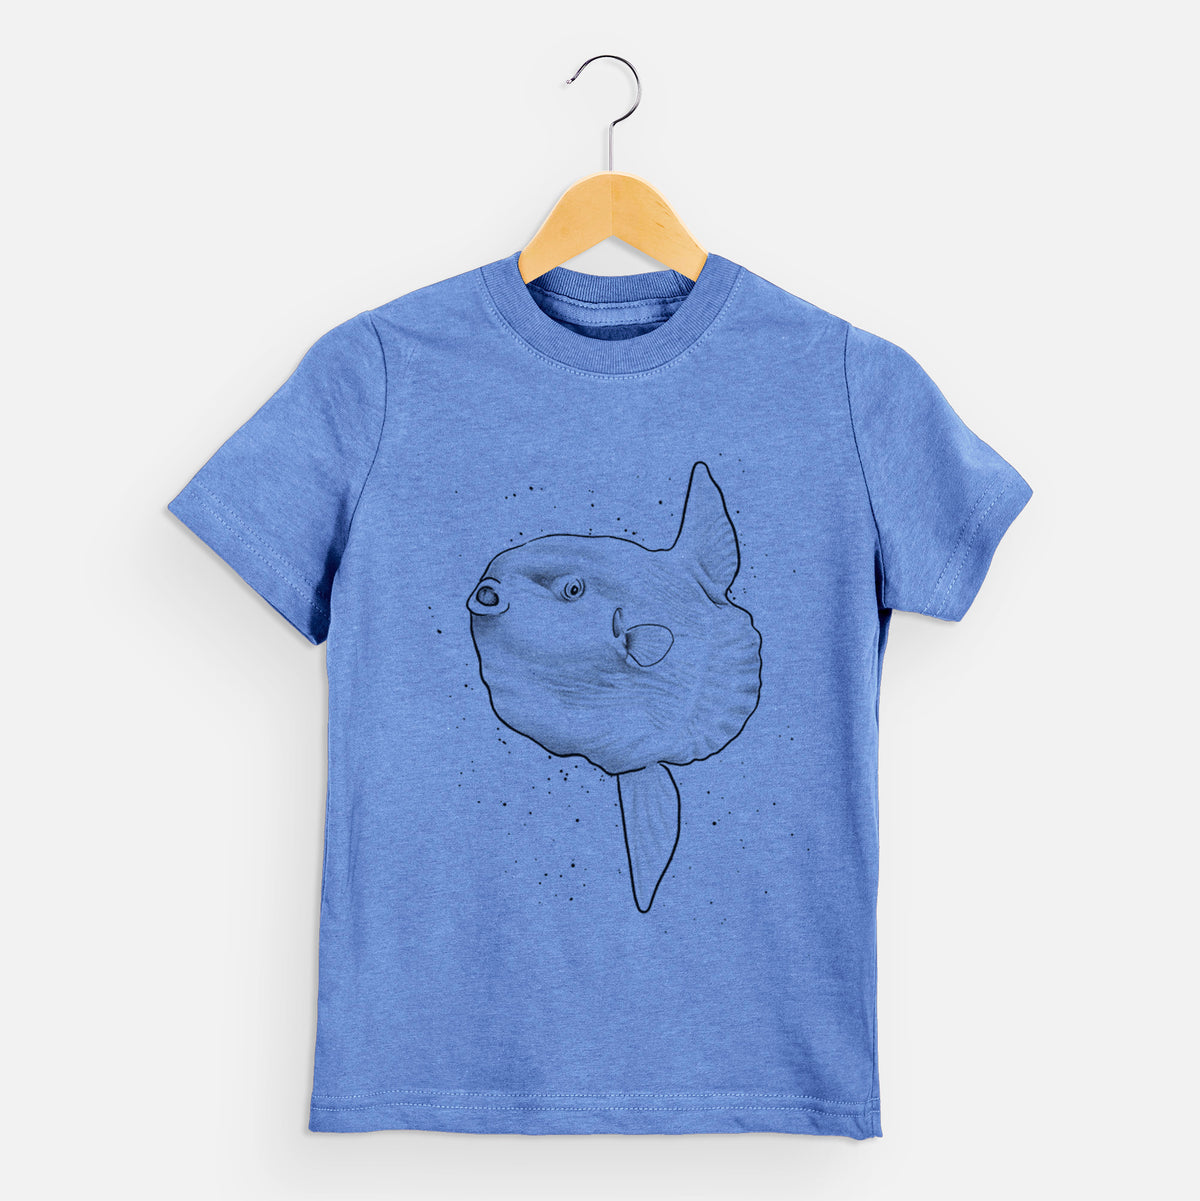 Ocean Sunfish - Mola mola - Kids Shirt